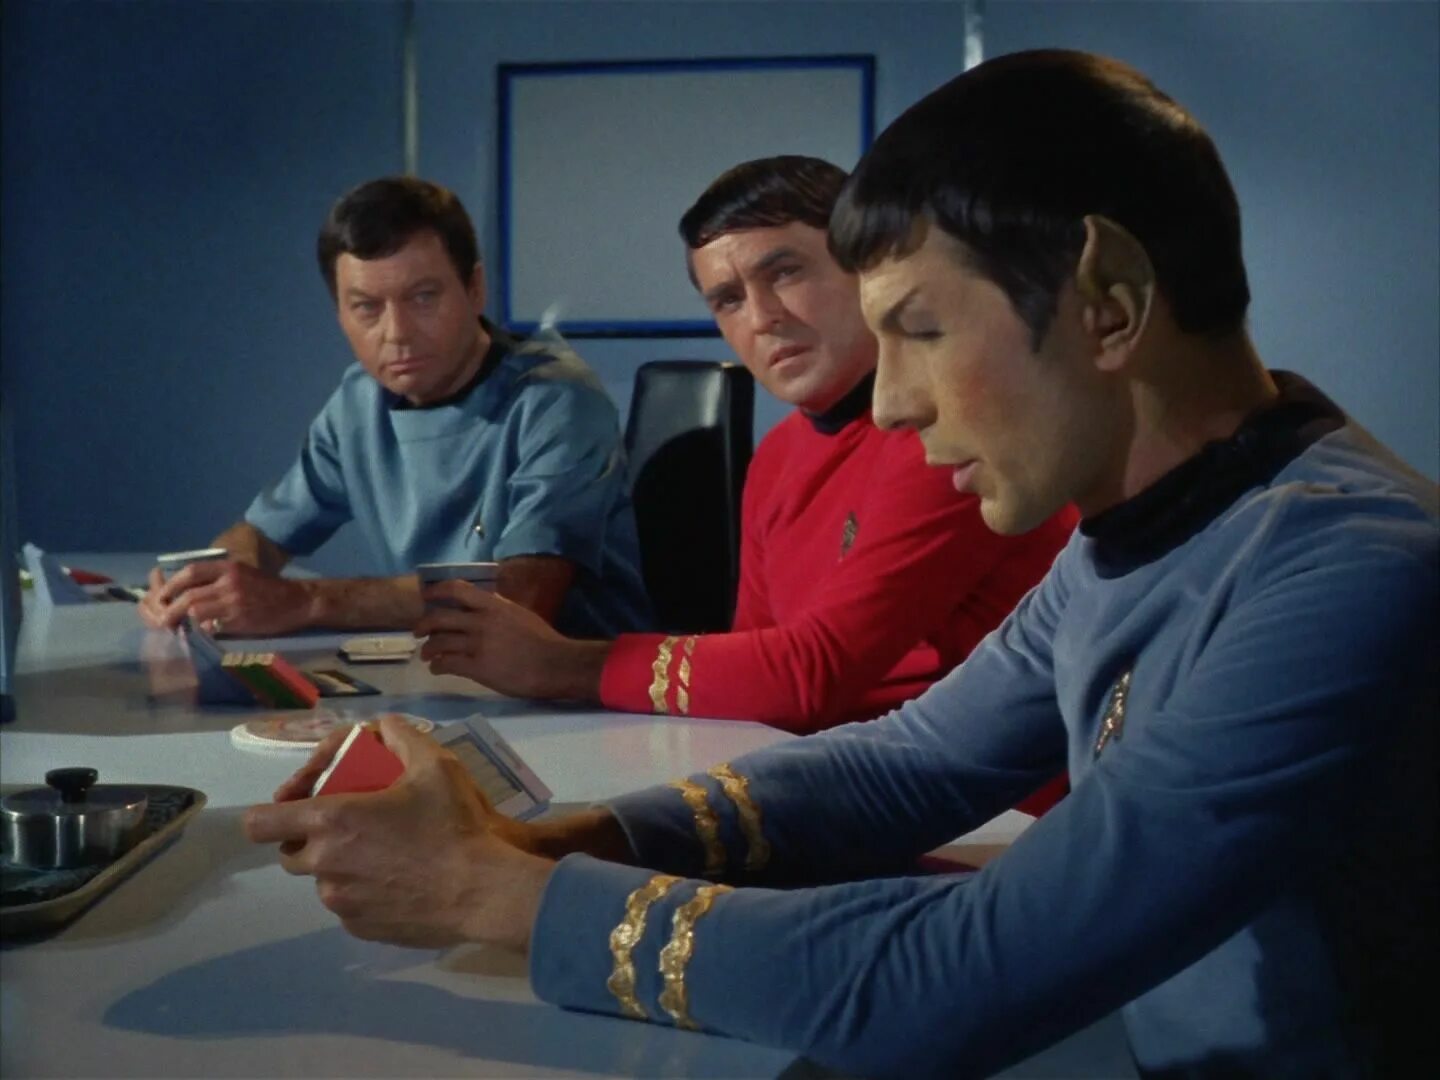 Star Trek Original Series. Star Trek TOS. Star trek original